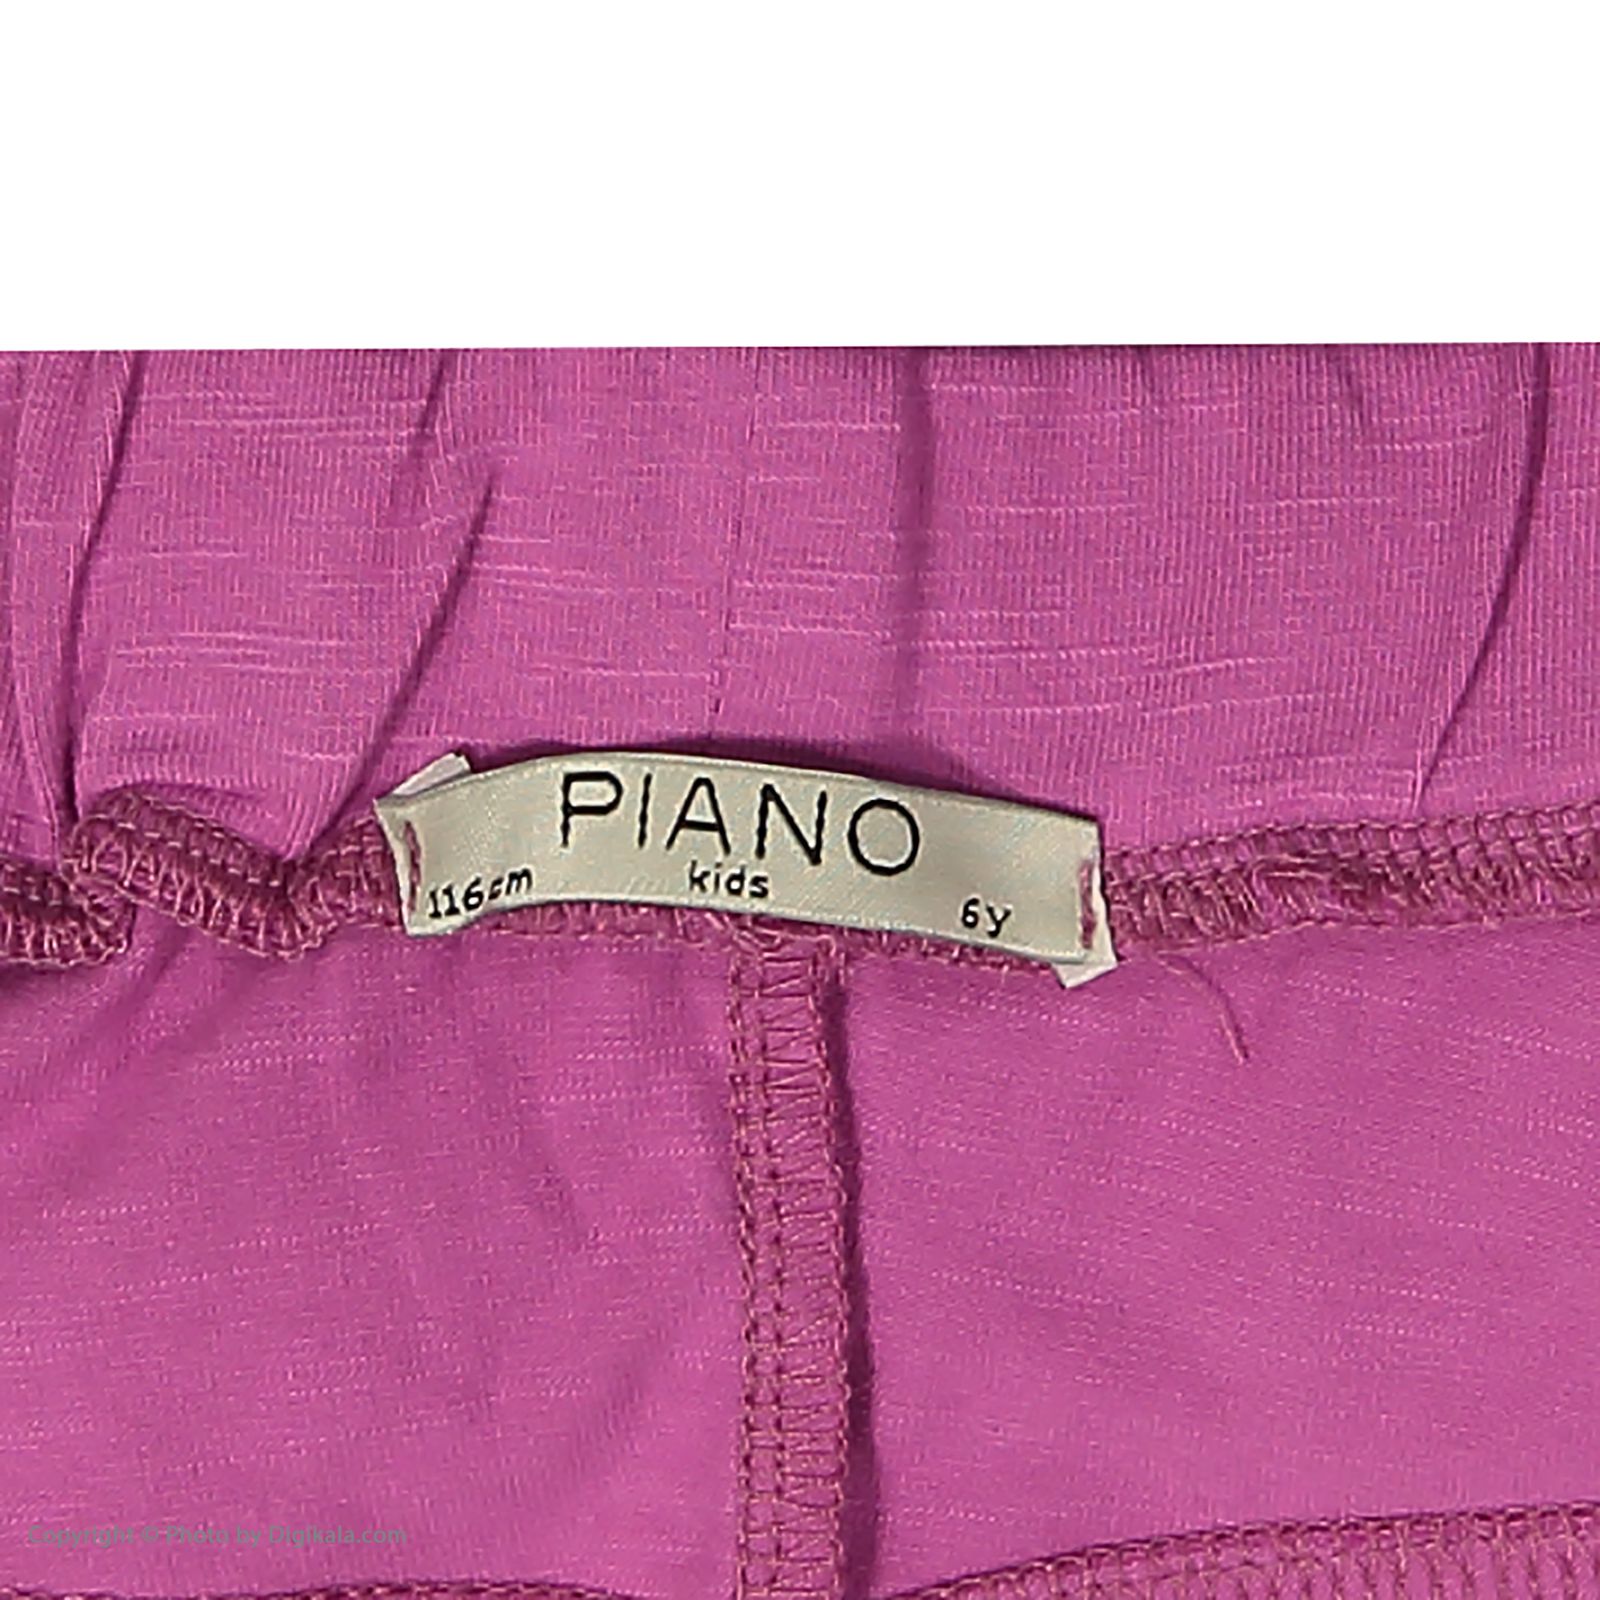 شلوار دخترانه پیانو مدل 01417-66 -  - 5